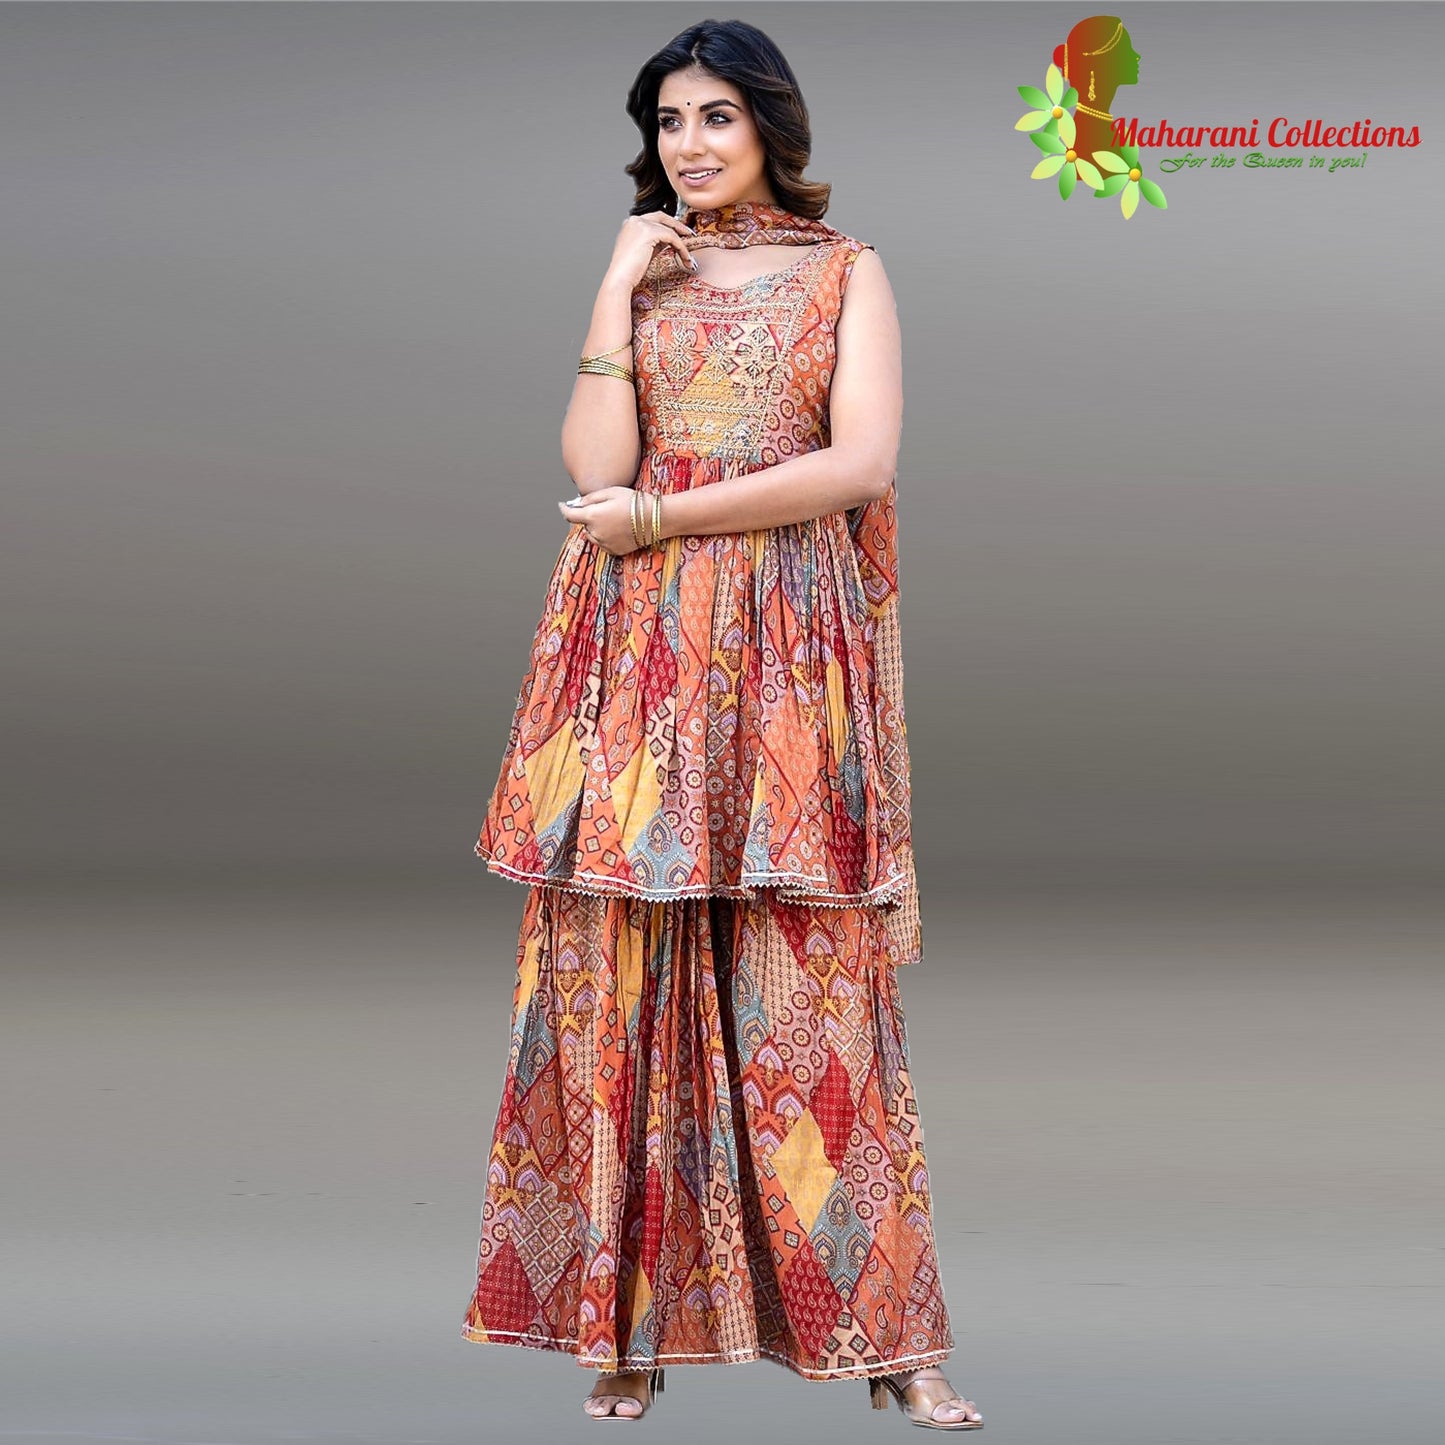 Maharani's Sharara Suit - Multicolor (L) - Cotton/Rayon